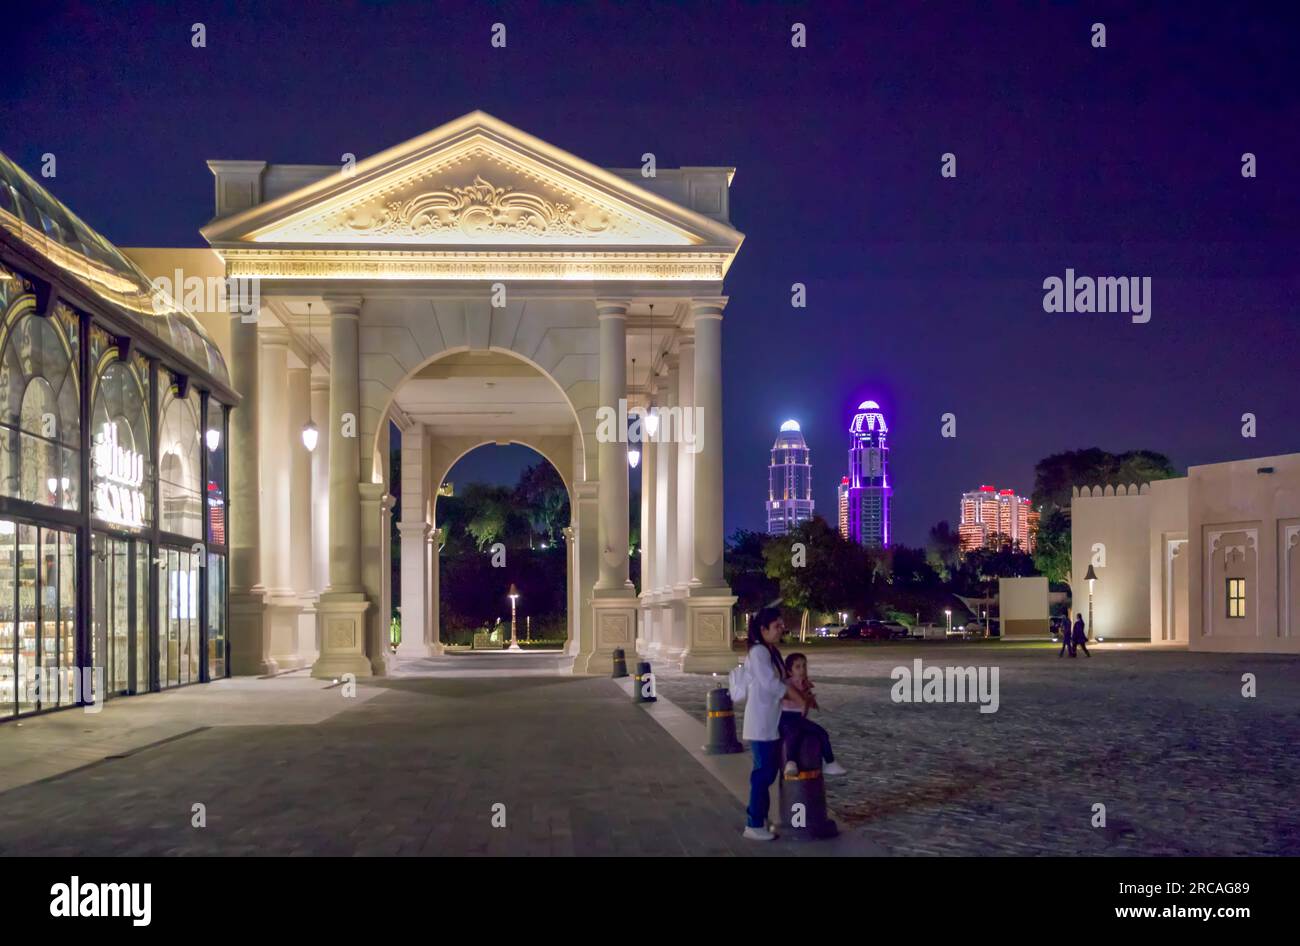 Galerías Lafayettes shopping mall, Doha, Qatar at night Stock Photo